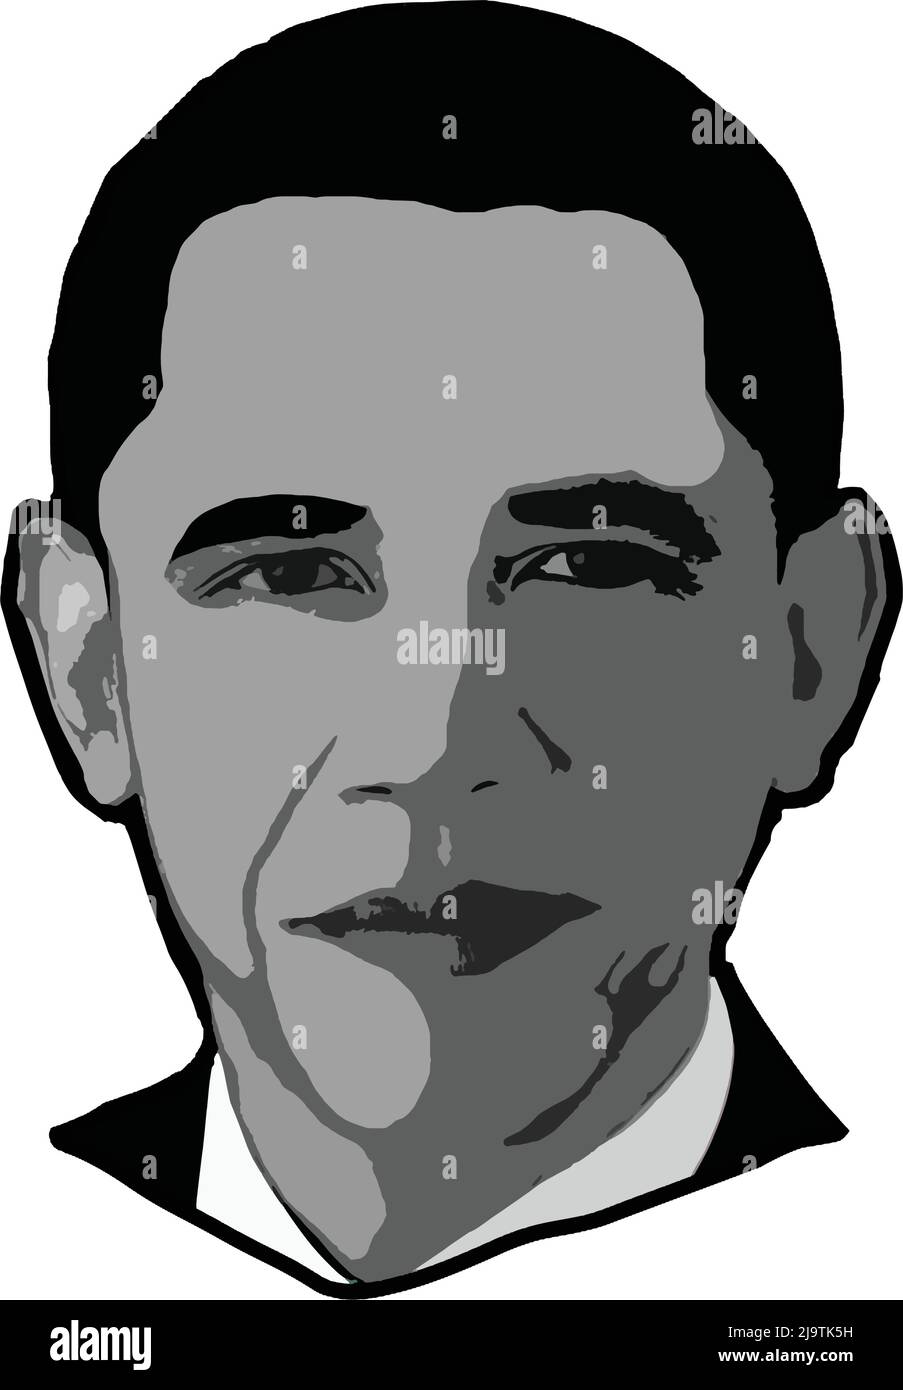 logo of barak obama in black and white color Stock Vector